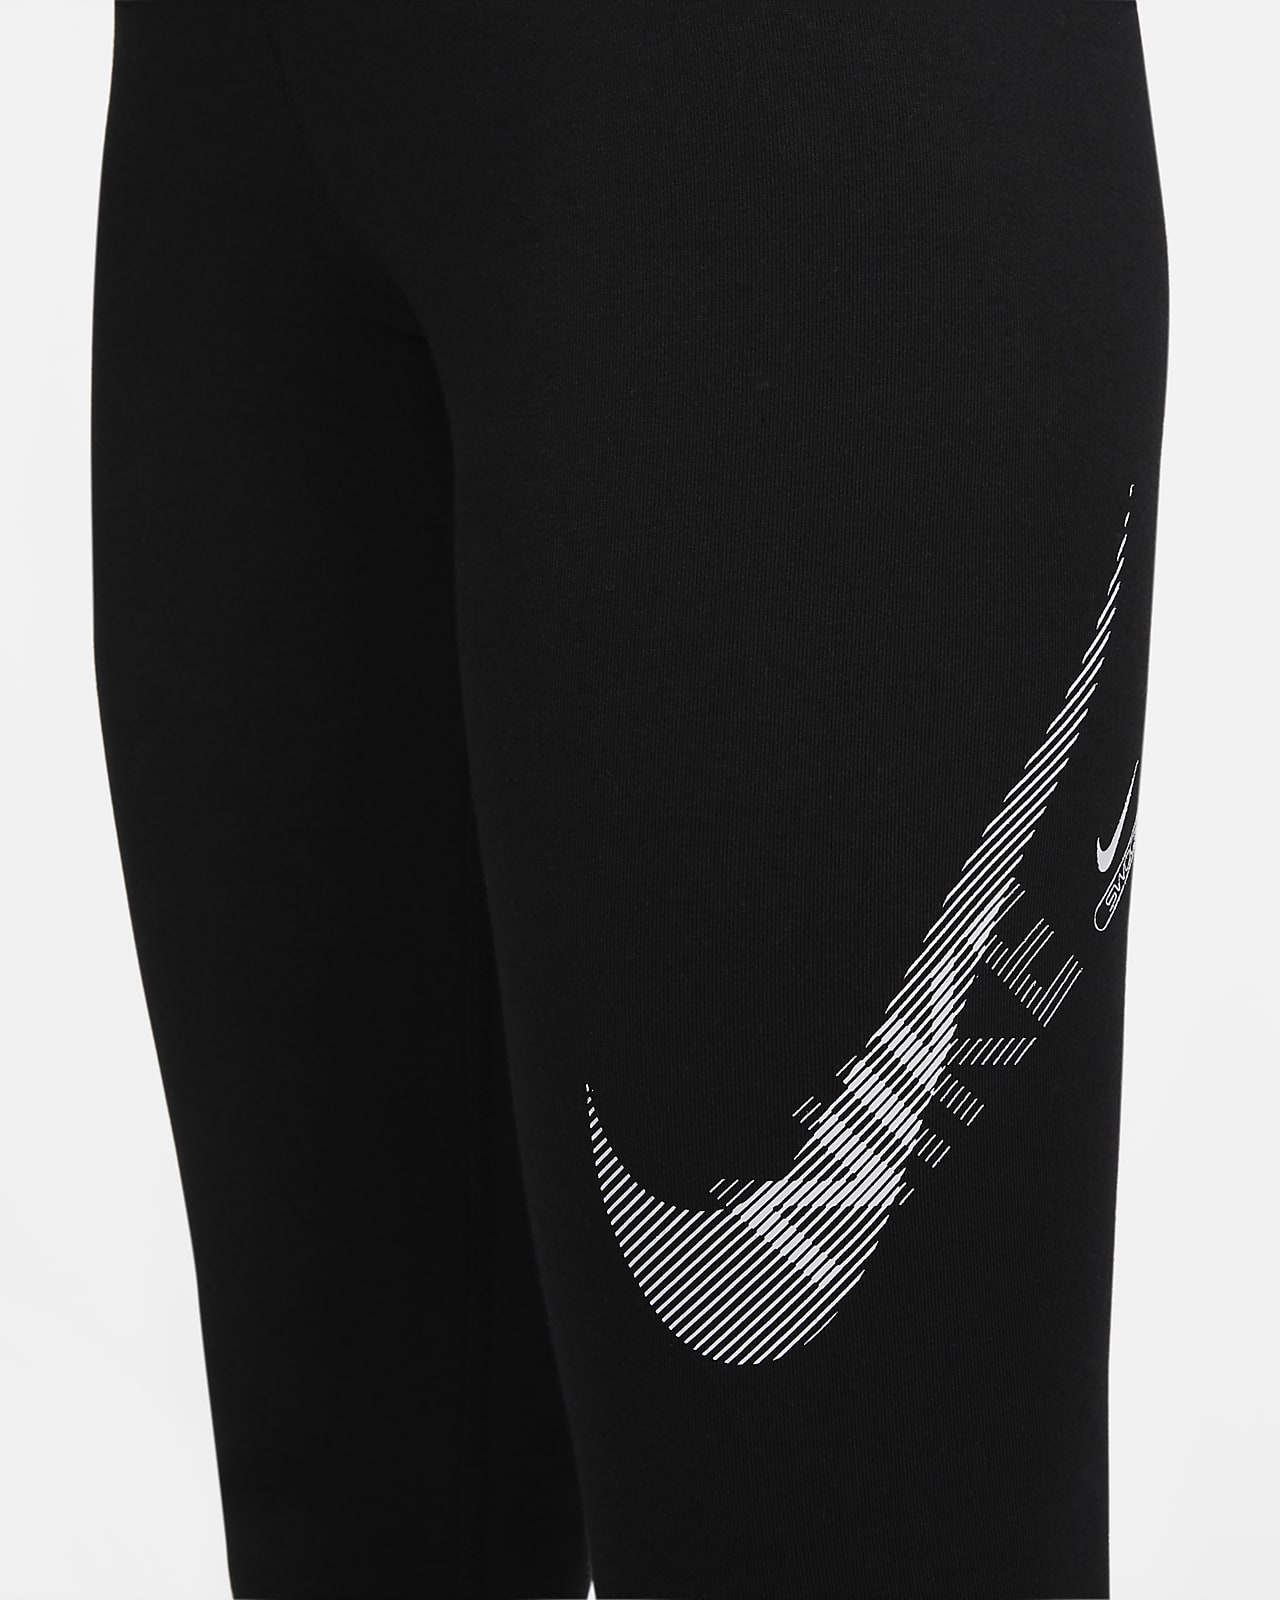 Nike Running/Gym Leggings (DM7767-010) Black and White Size XL